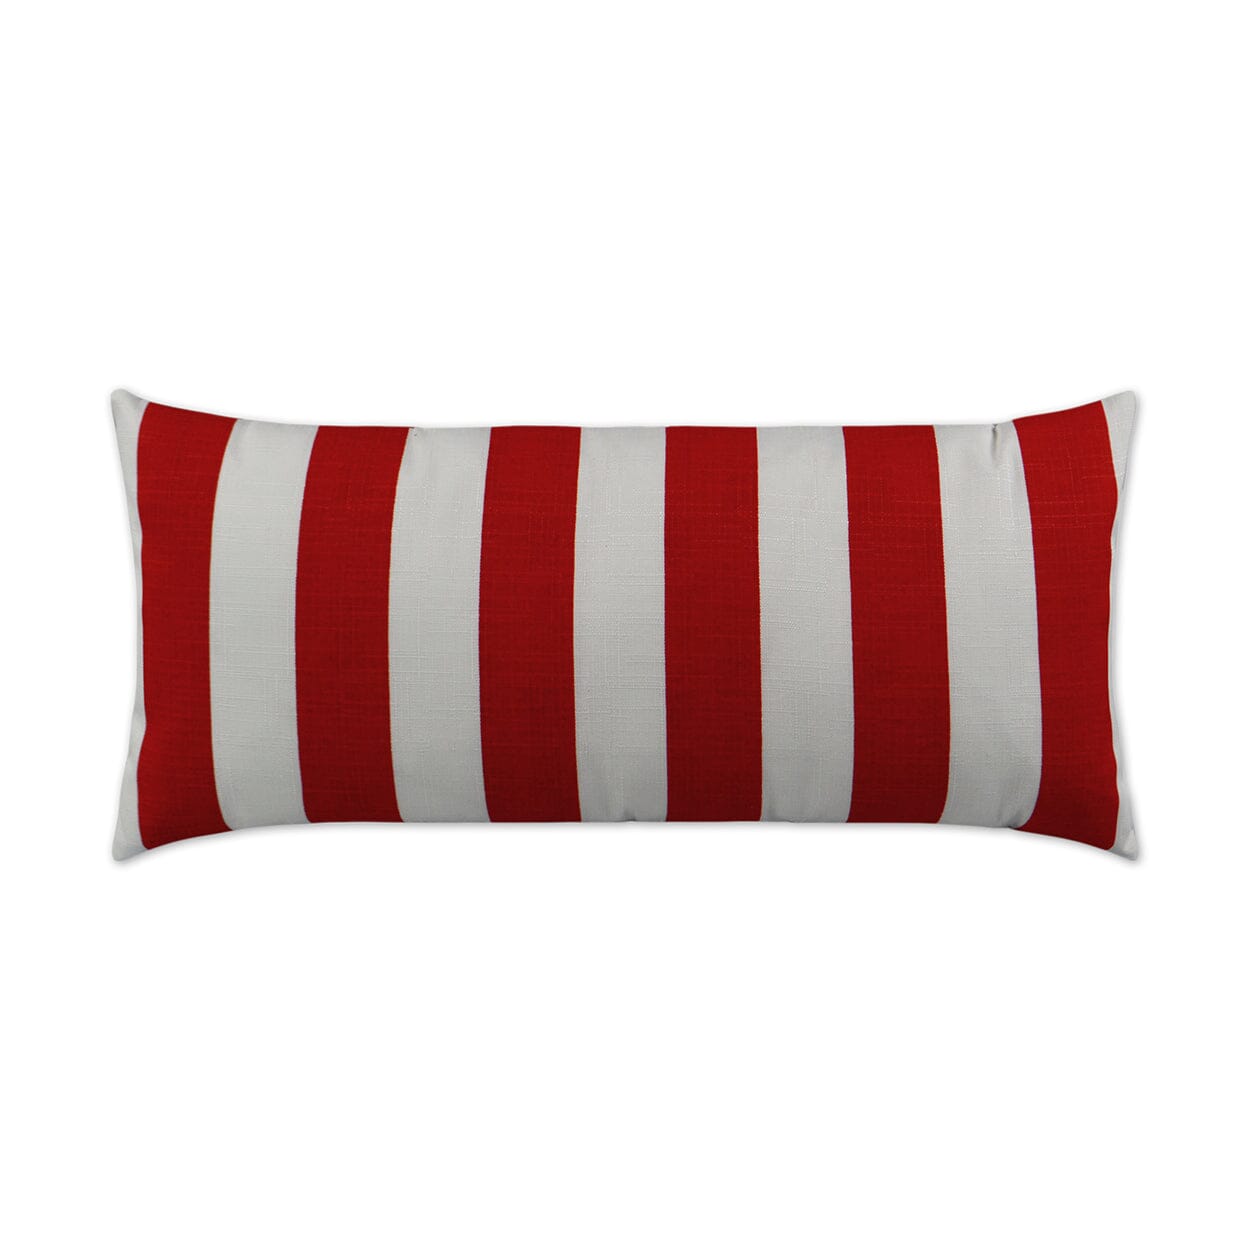 D.V. Kap 12" x 24" Outdoor Lumbar Pillow | Classics Red Pillows D.V Kap Outdoor